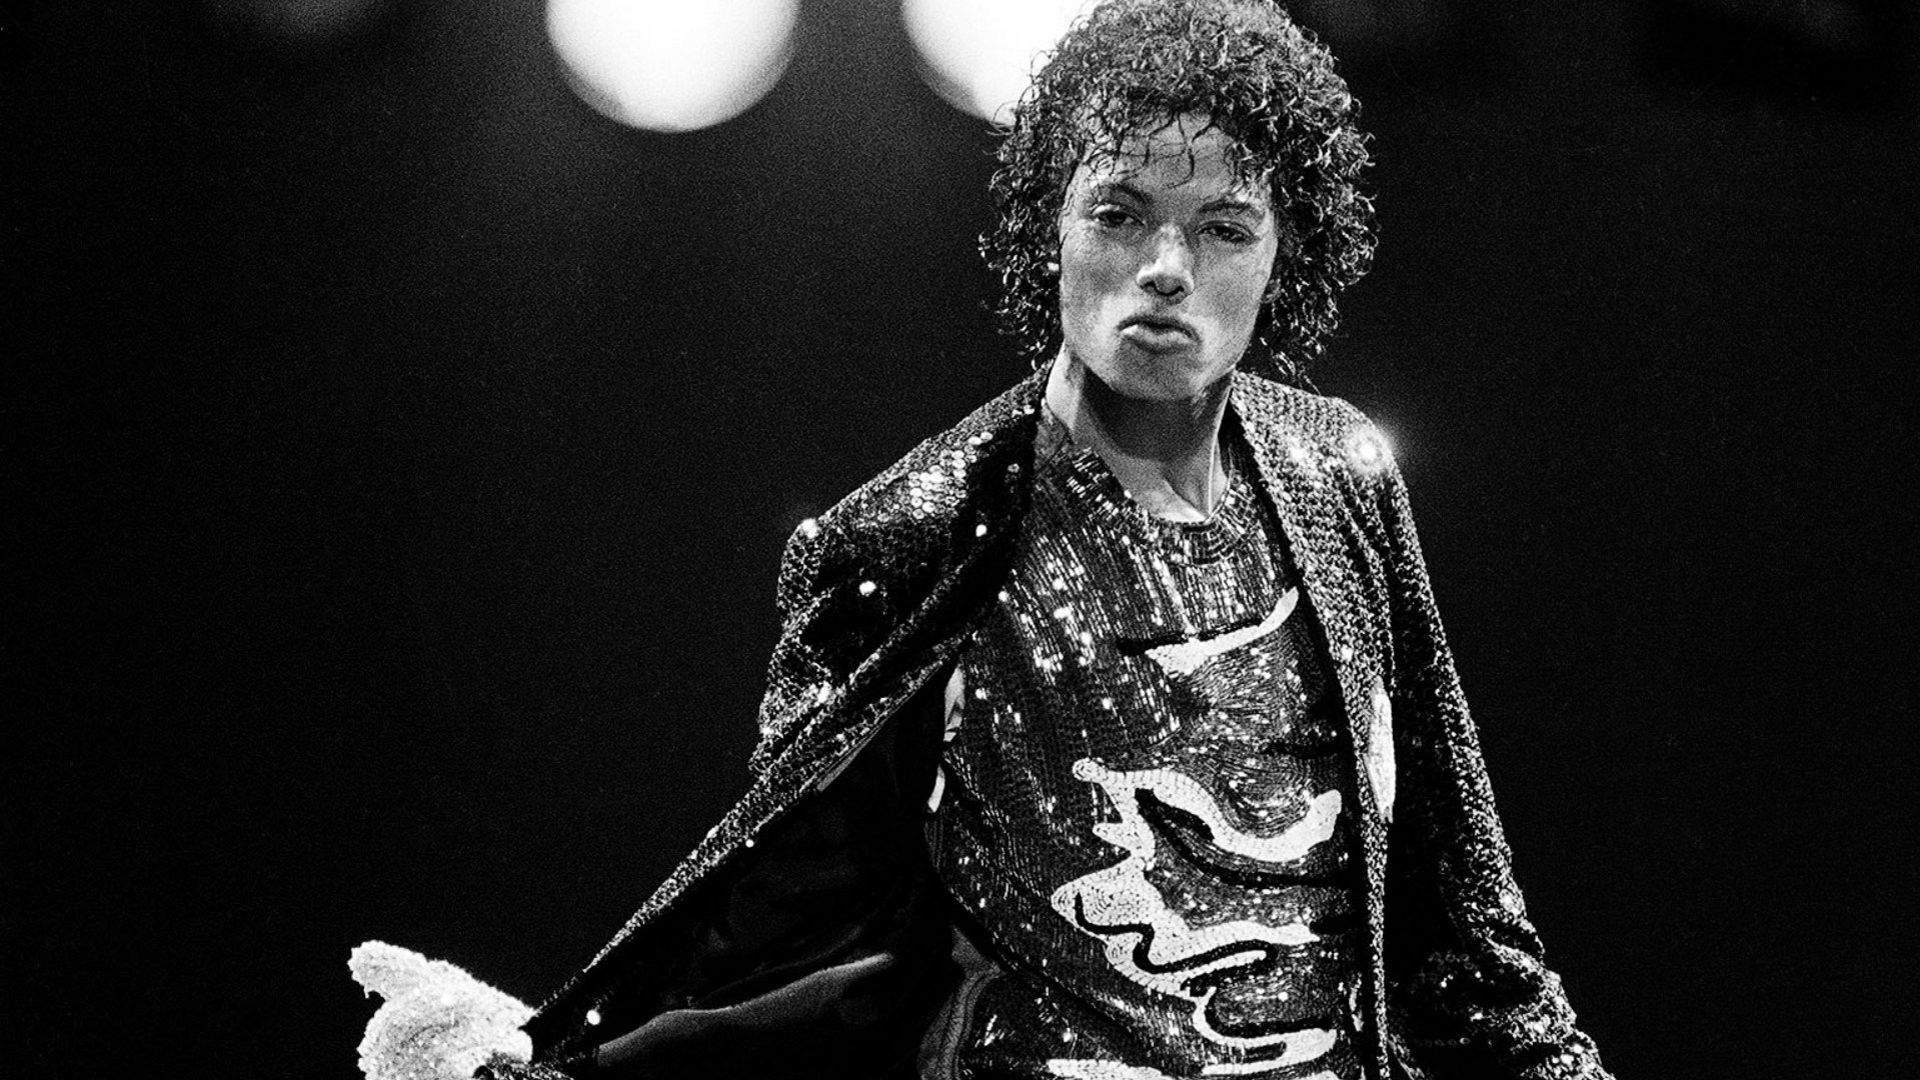  Wallpapers Michael Jackson Galleries Michael Jackson Pics Michael